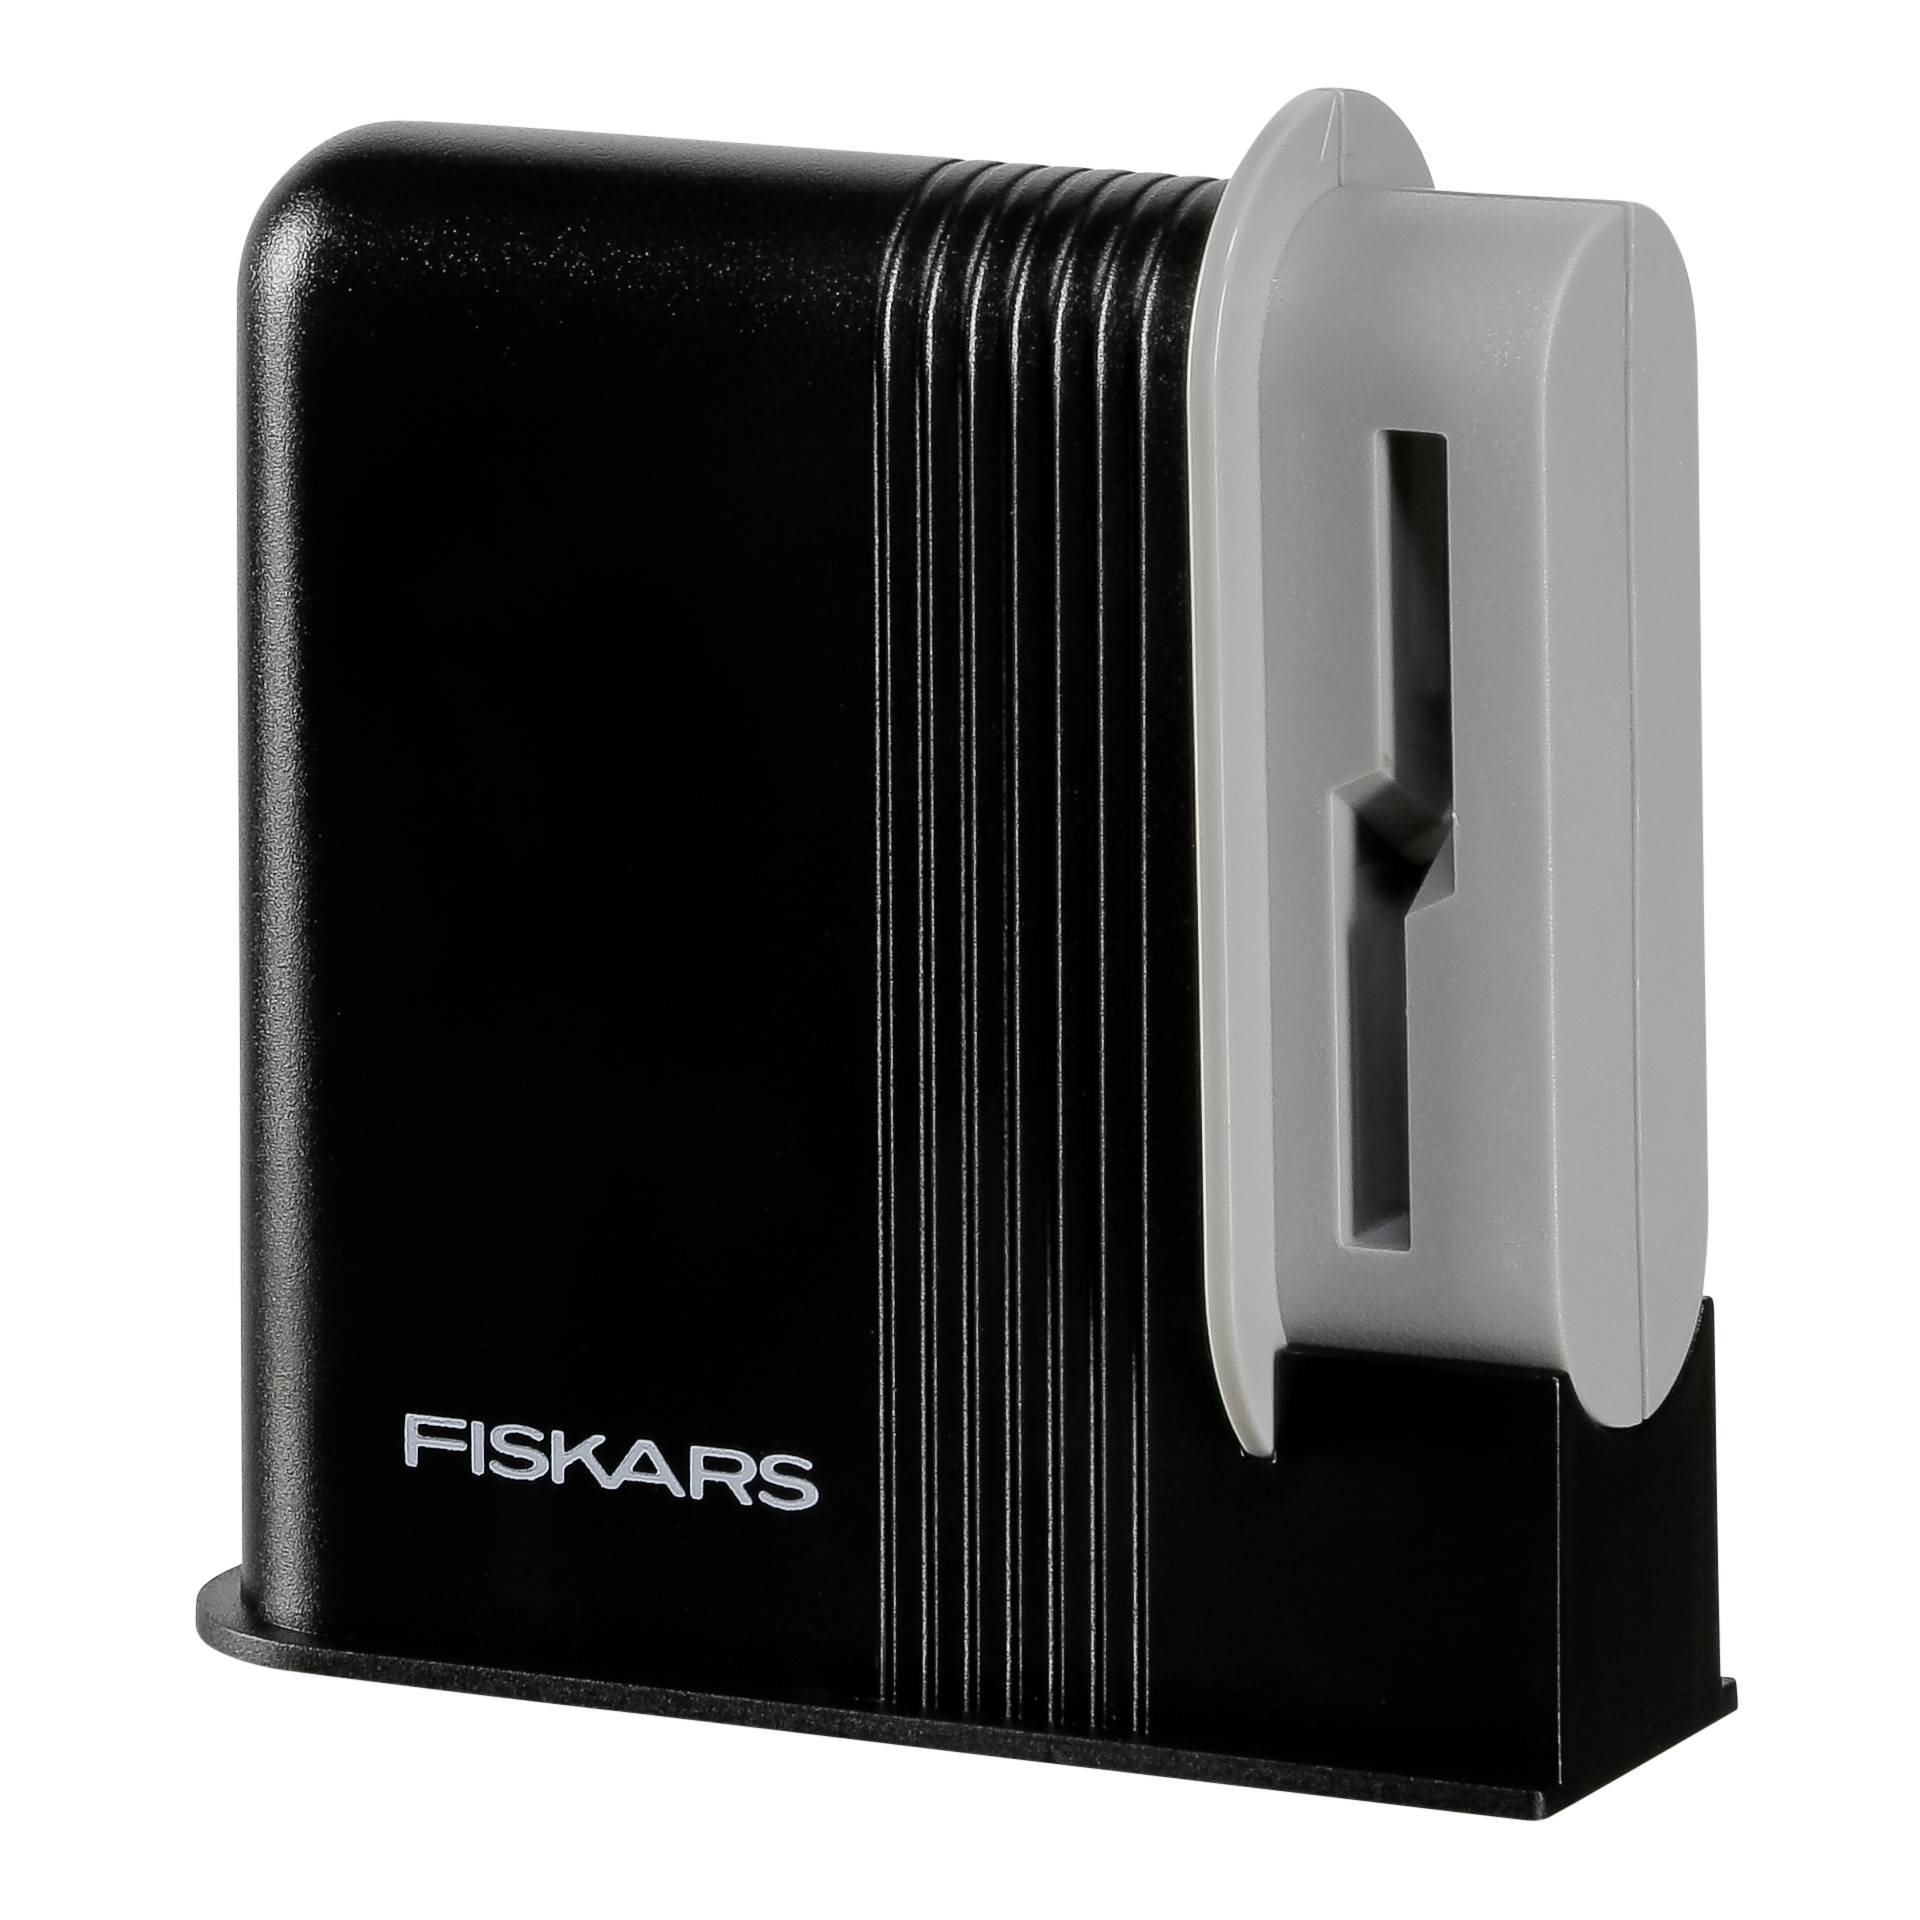 Fiskars Clip - Sharp Scissors scharpener